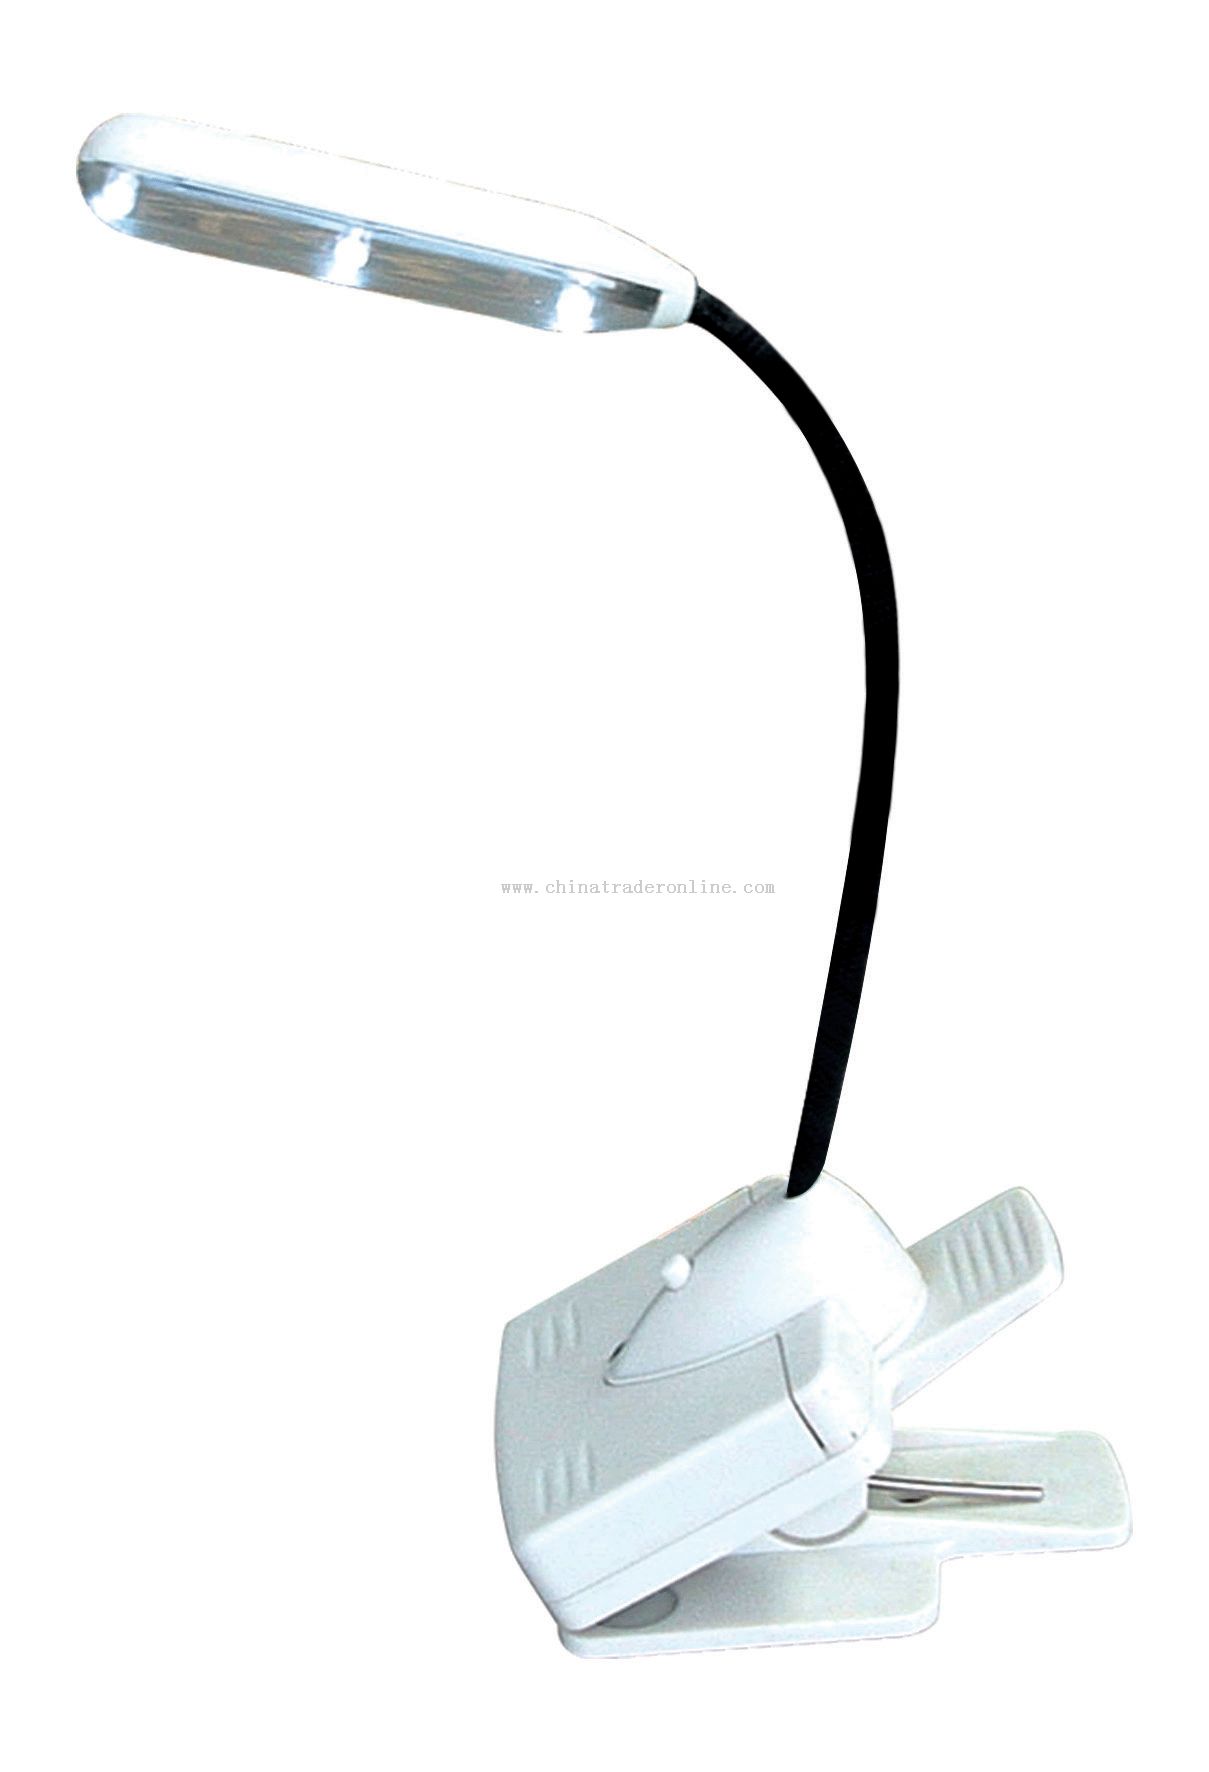 Flashing Desk Lamp from China